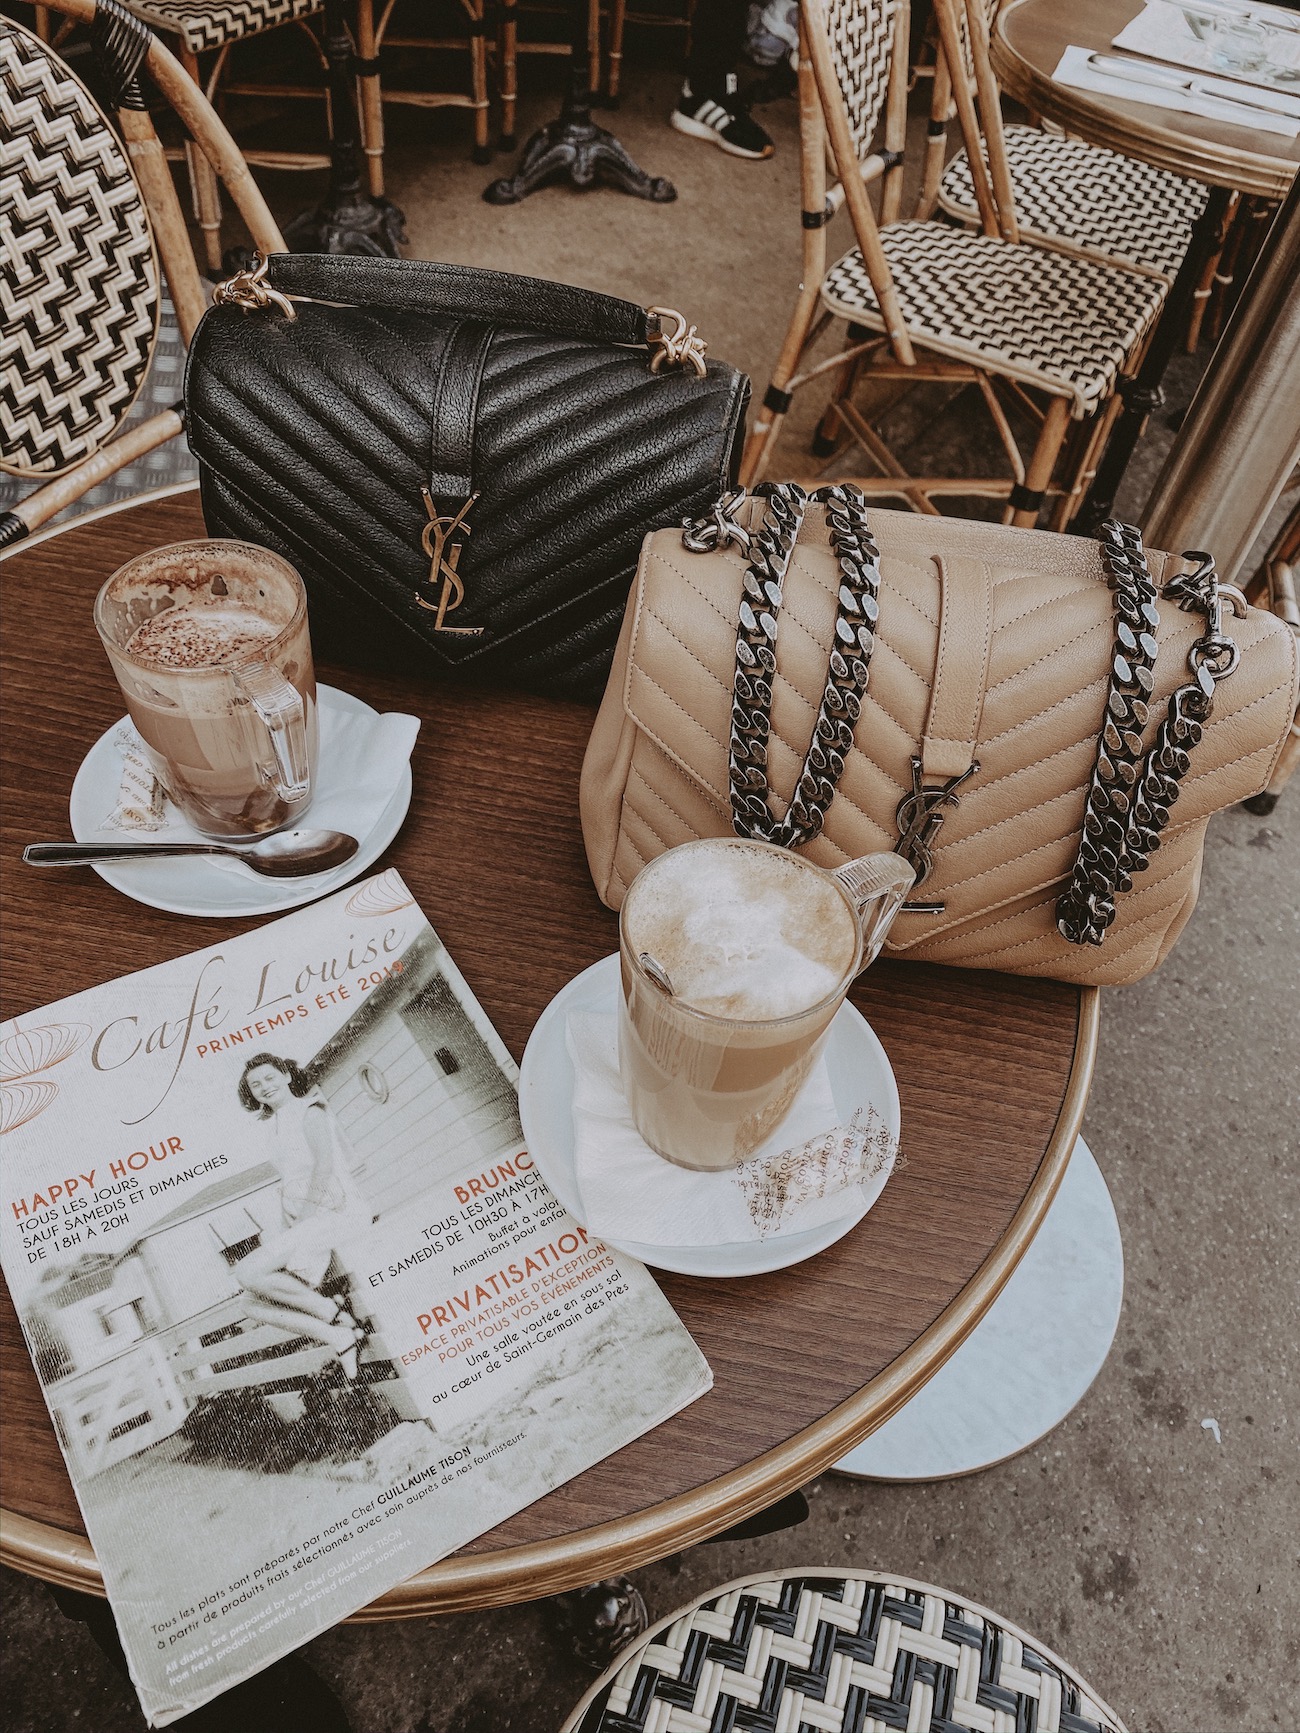 Cafes To Visit in Paris | Paris Cafes | YSL Bag | Coffee & YSL